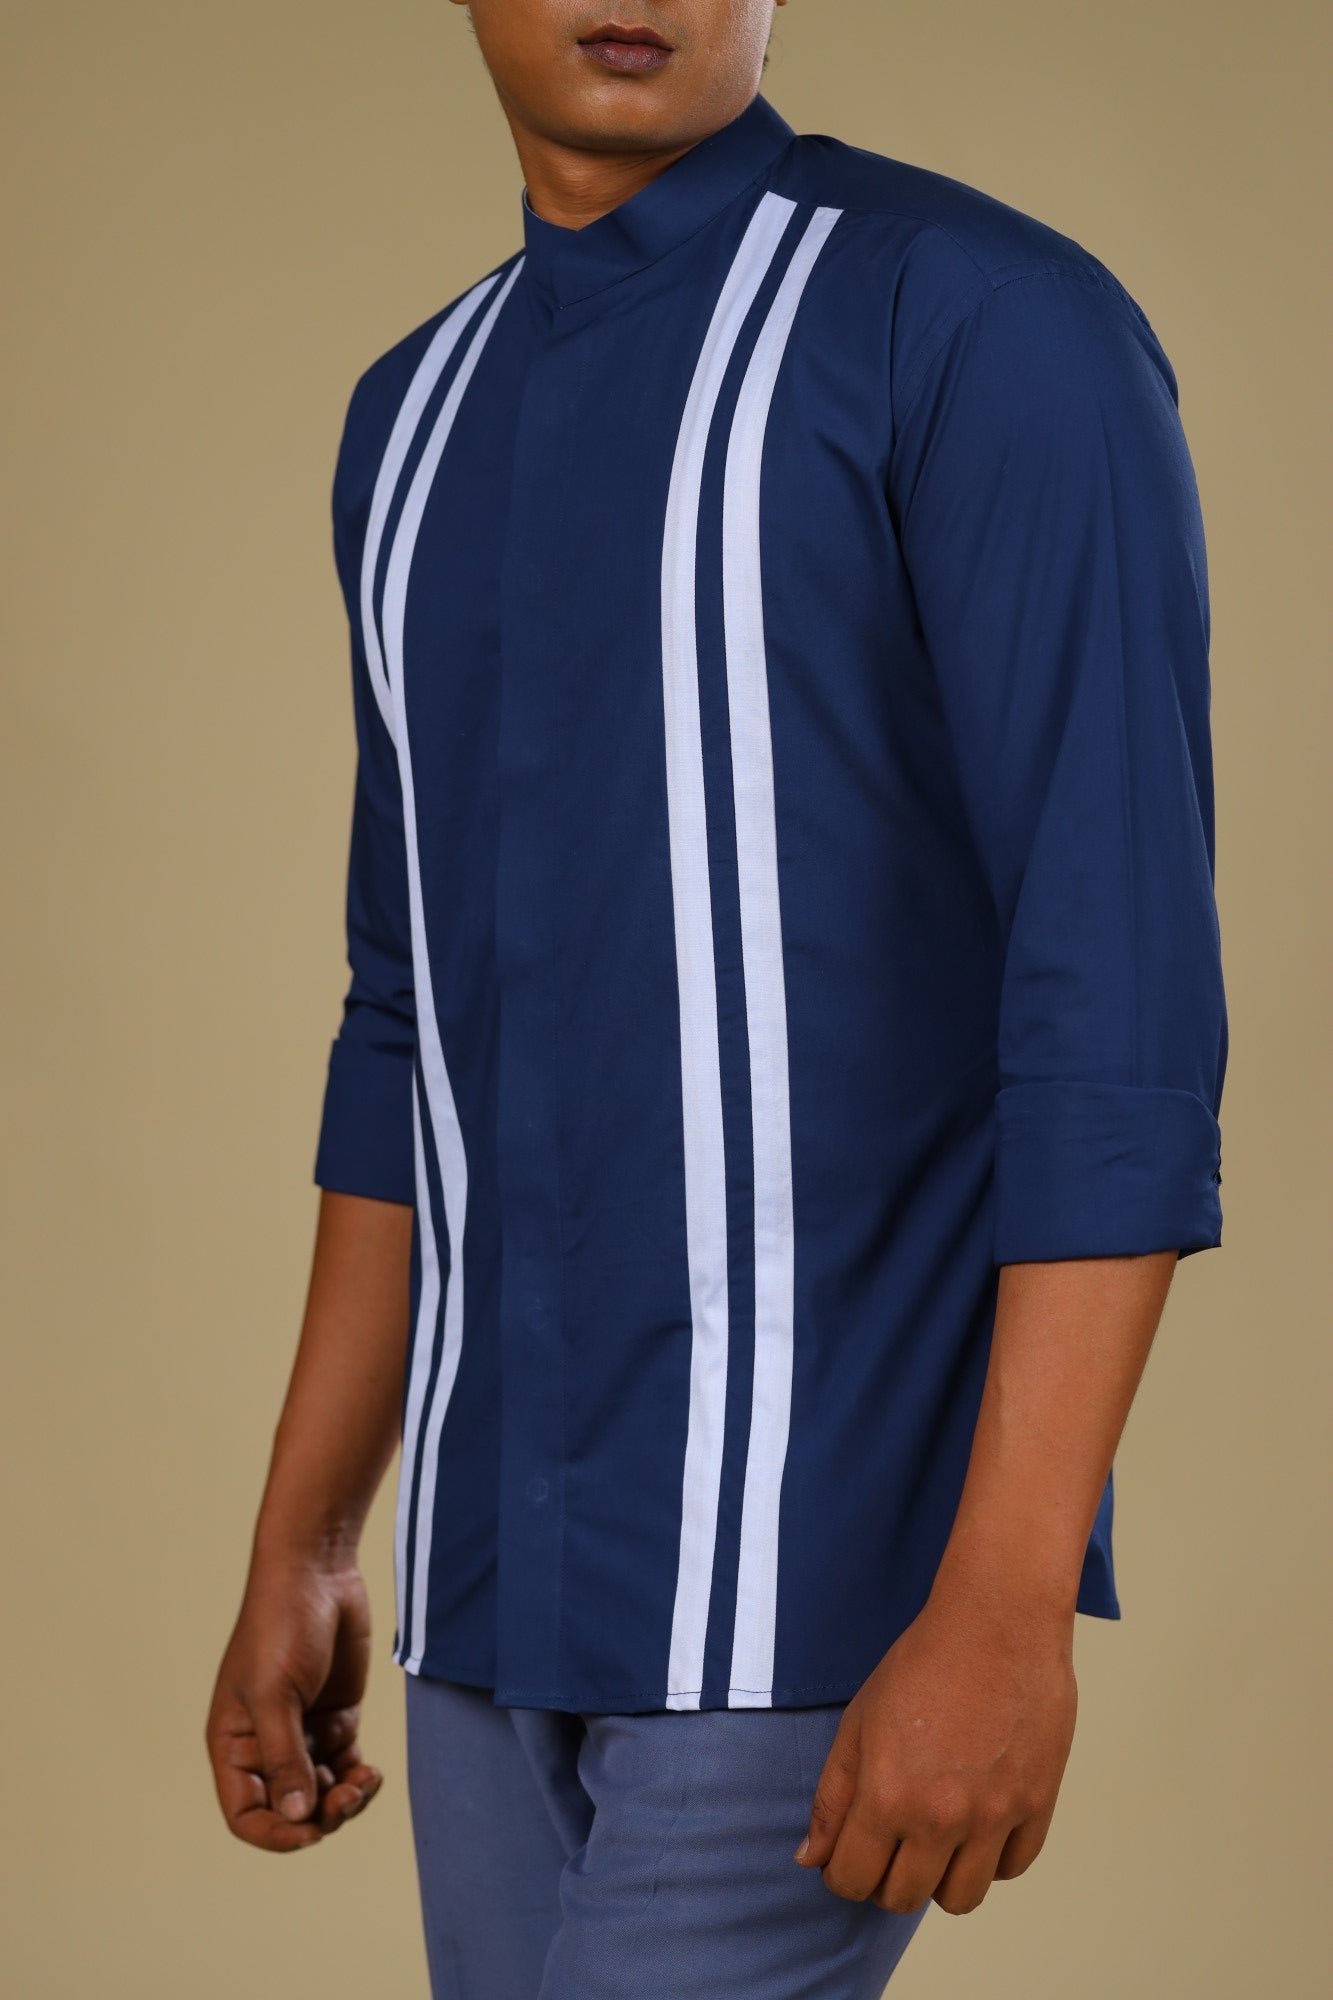 Men's Light Blue Color Blue Turk Shirt Full Sleeves Casual Shirt - Hilo Design